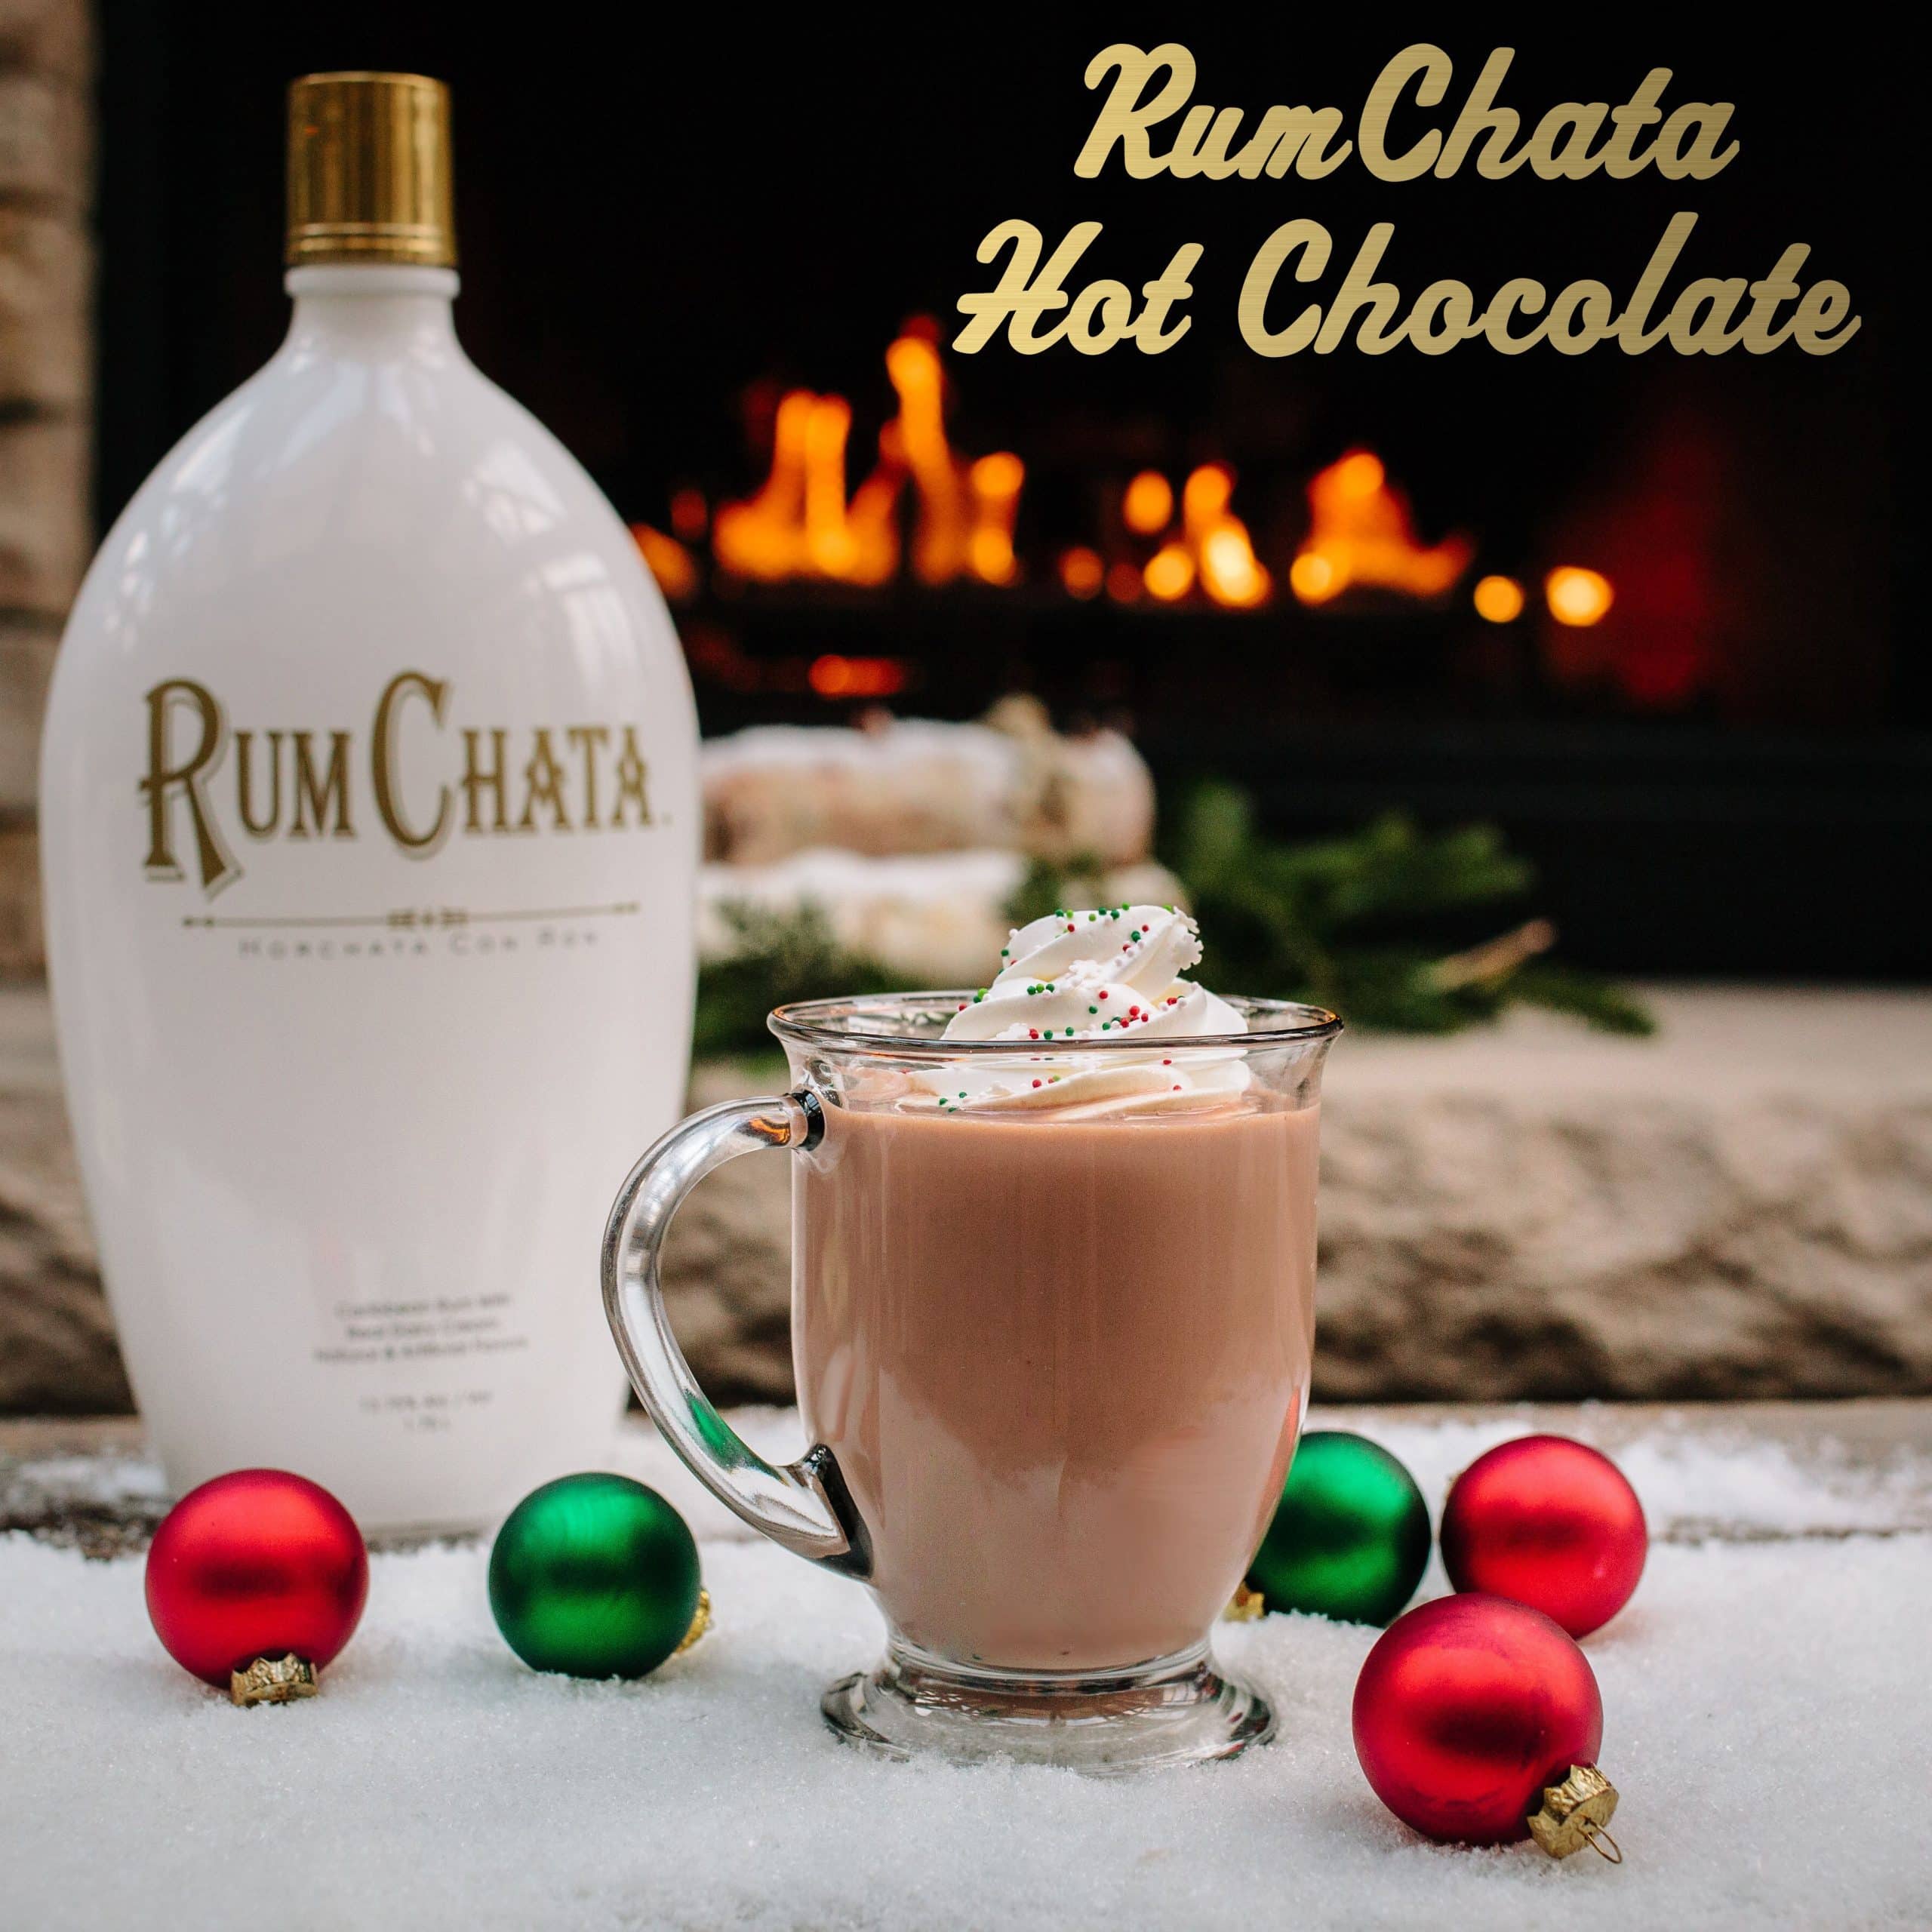 Rum Chata Rum Recipes : What Is Rumchata